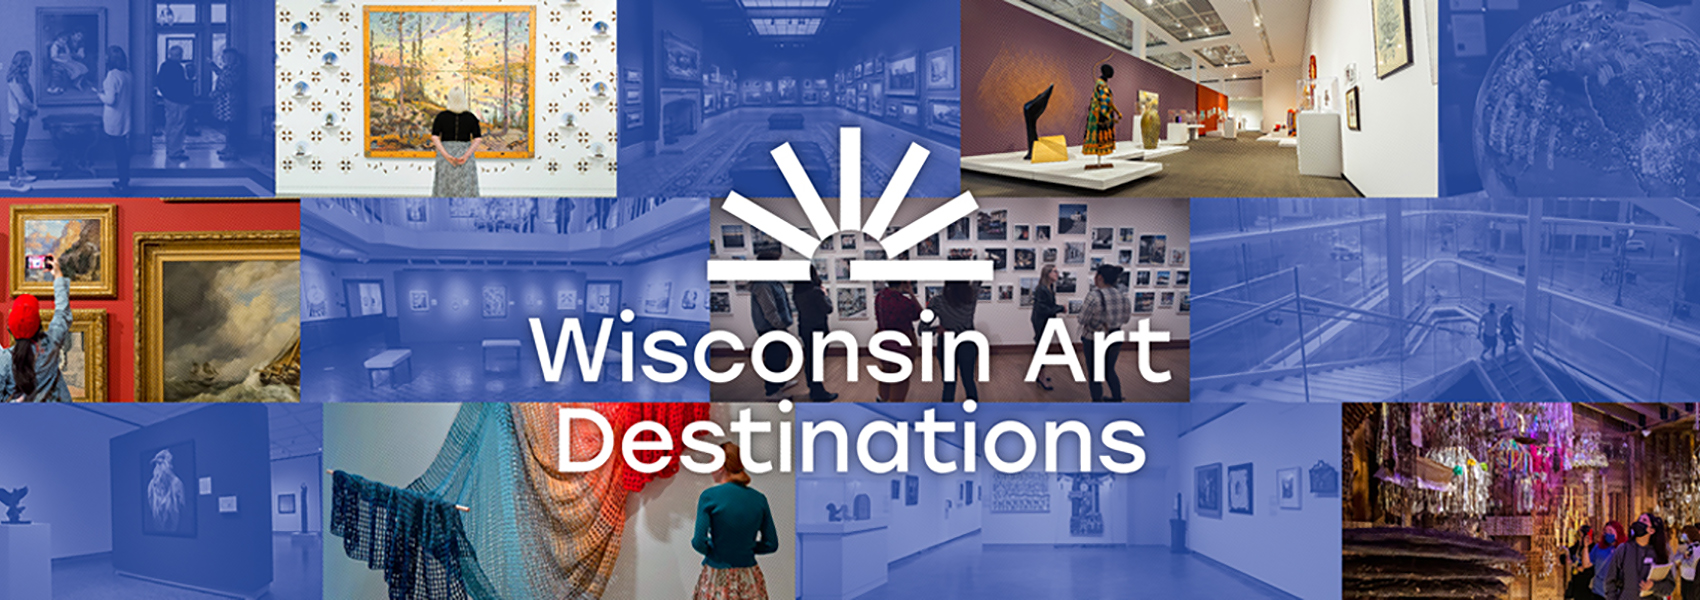 Wisconsin Art Destinations graphic